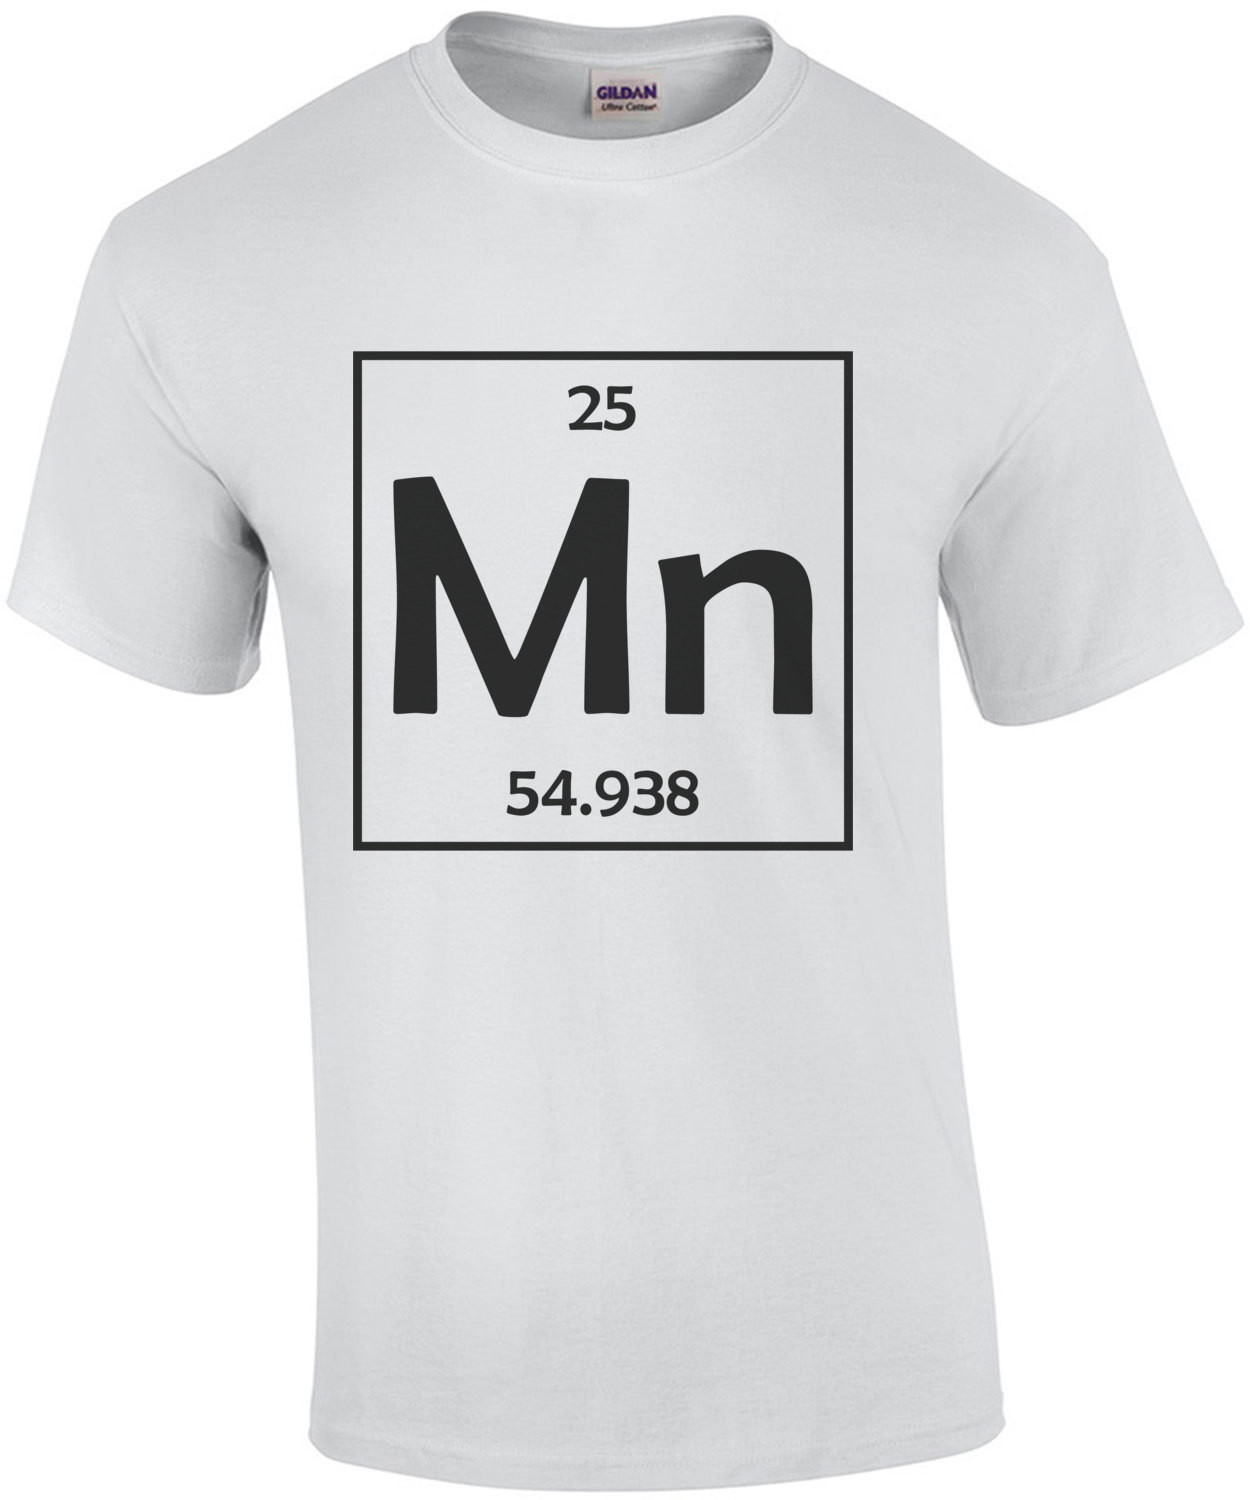 Mn Element - Minnesota T-Shirt